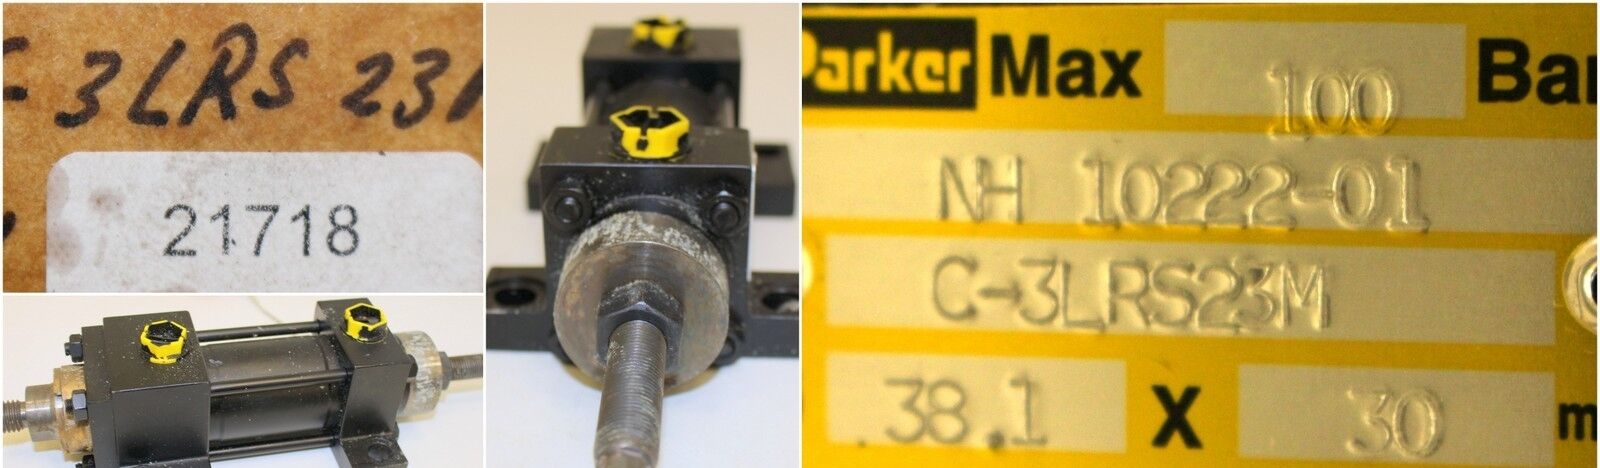 PARKER Zylinder doppelwandig 38,1x30 - C-3LRS23M - max. 100 bar - NH10222-01